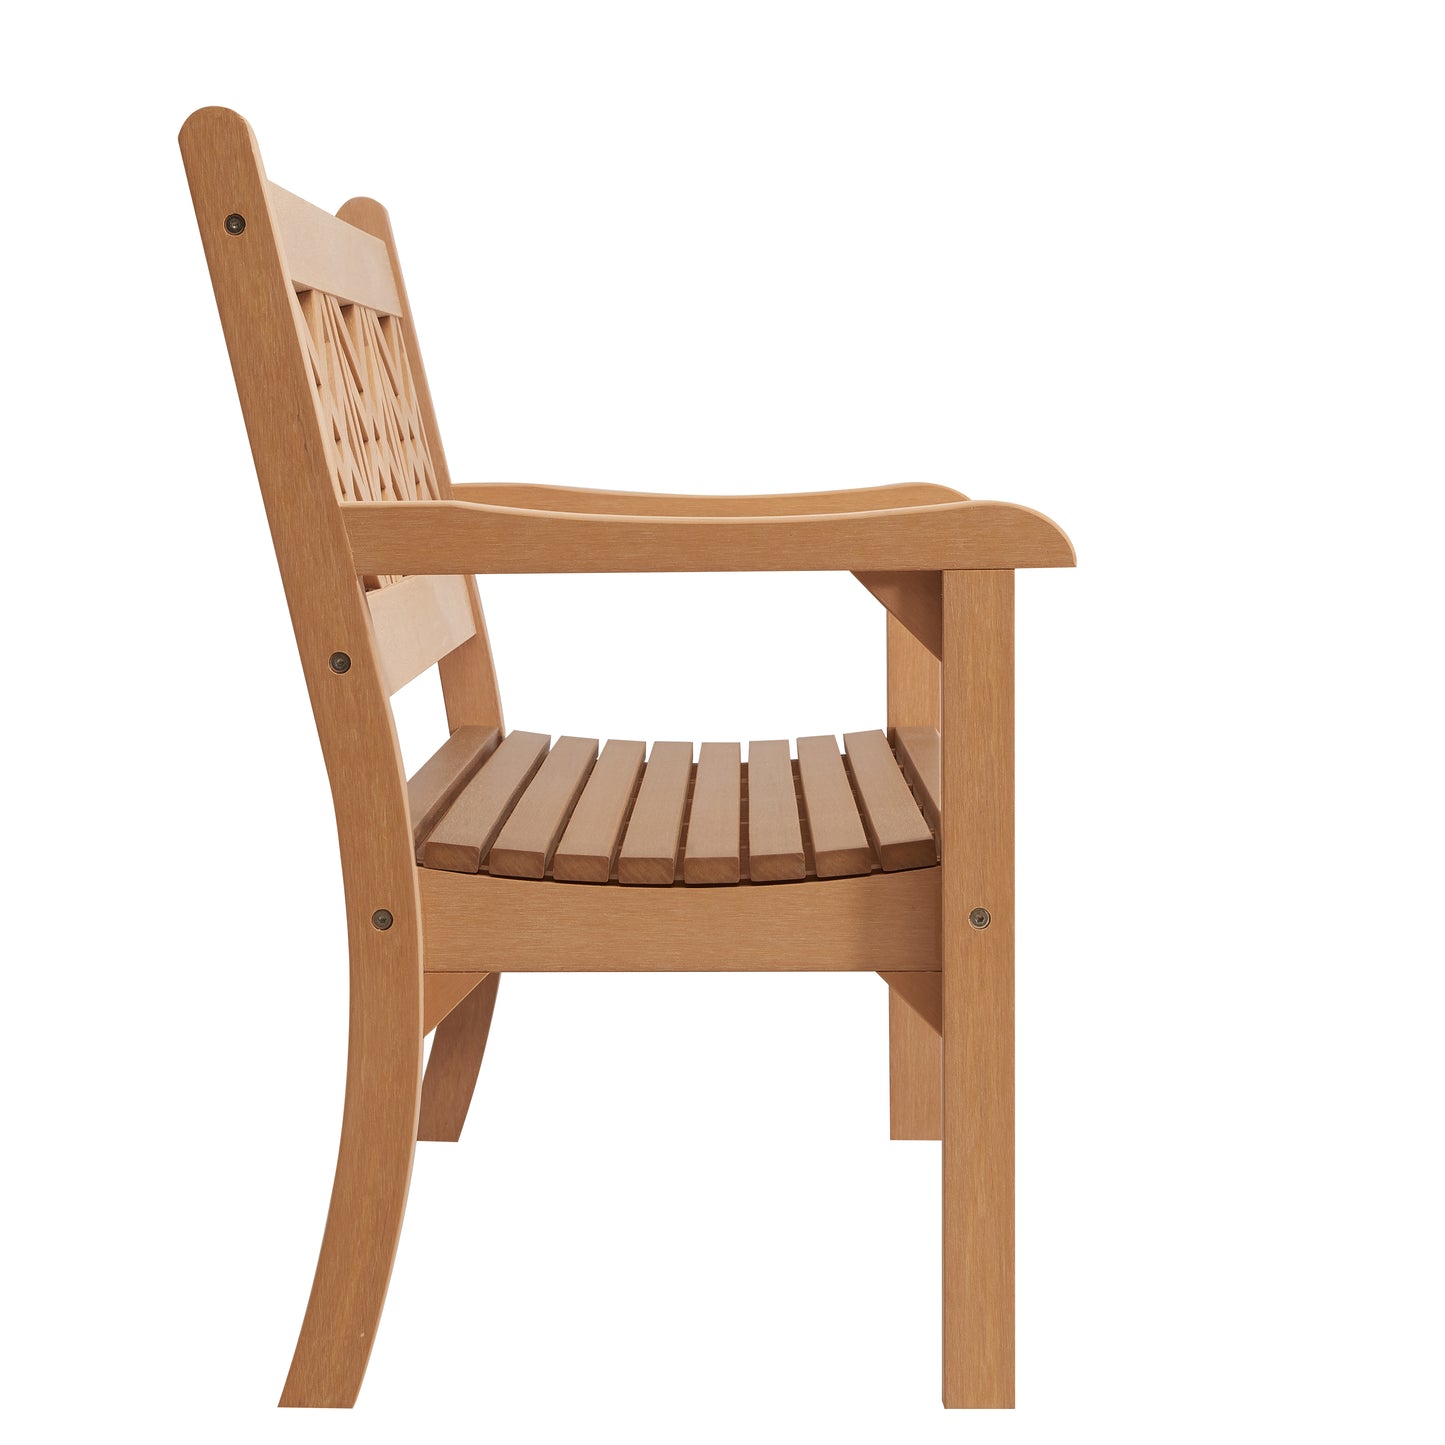 Winawood Speyside 3 Seater Wood Effect Bench - New Teak